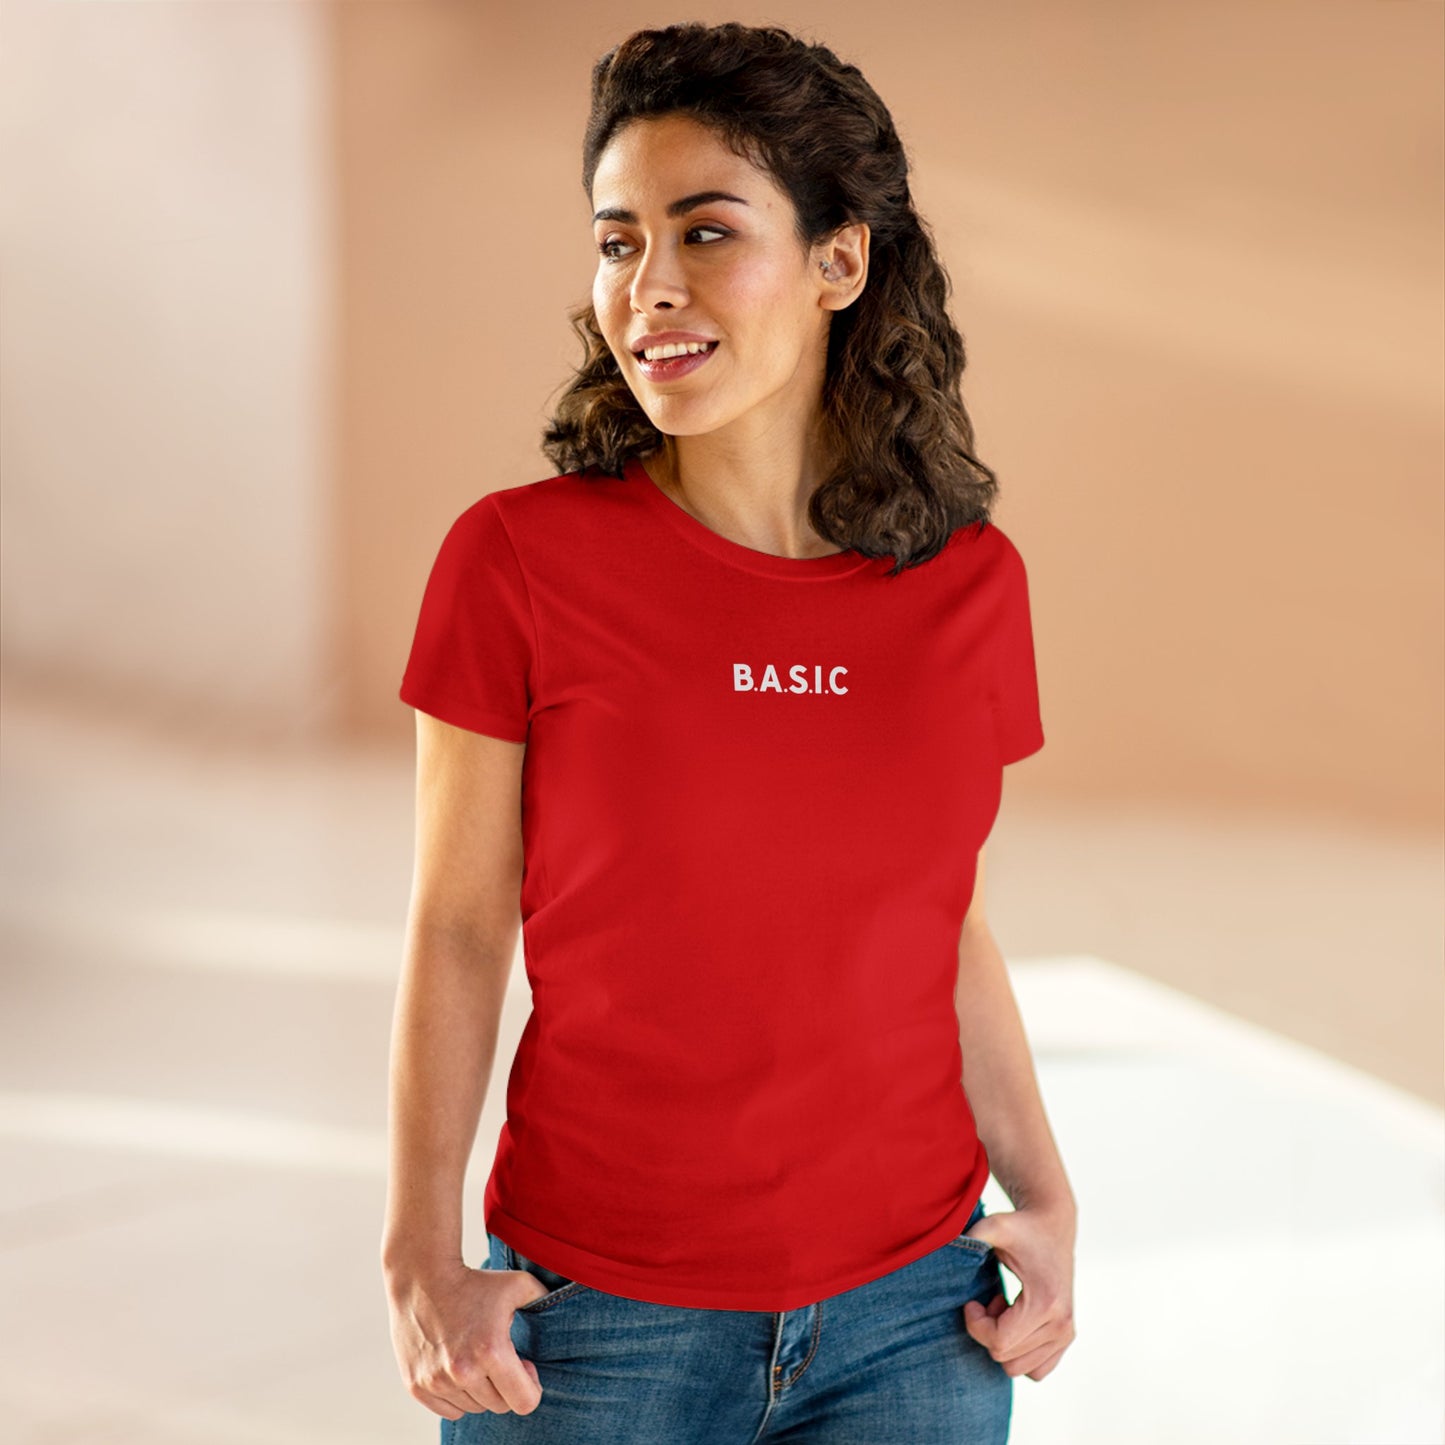 Women's B.A.S.I.C "Small Sized Logo" White Font Tee Shirt